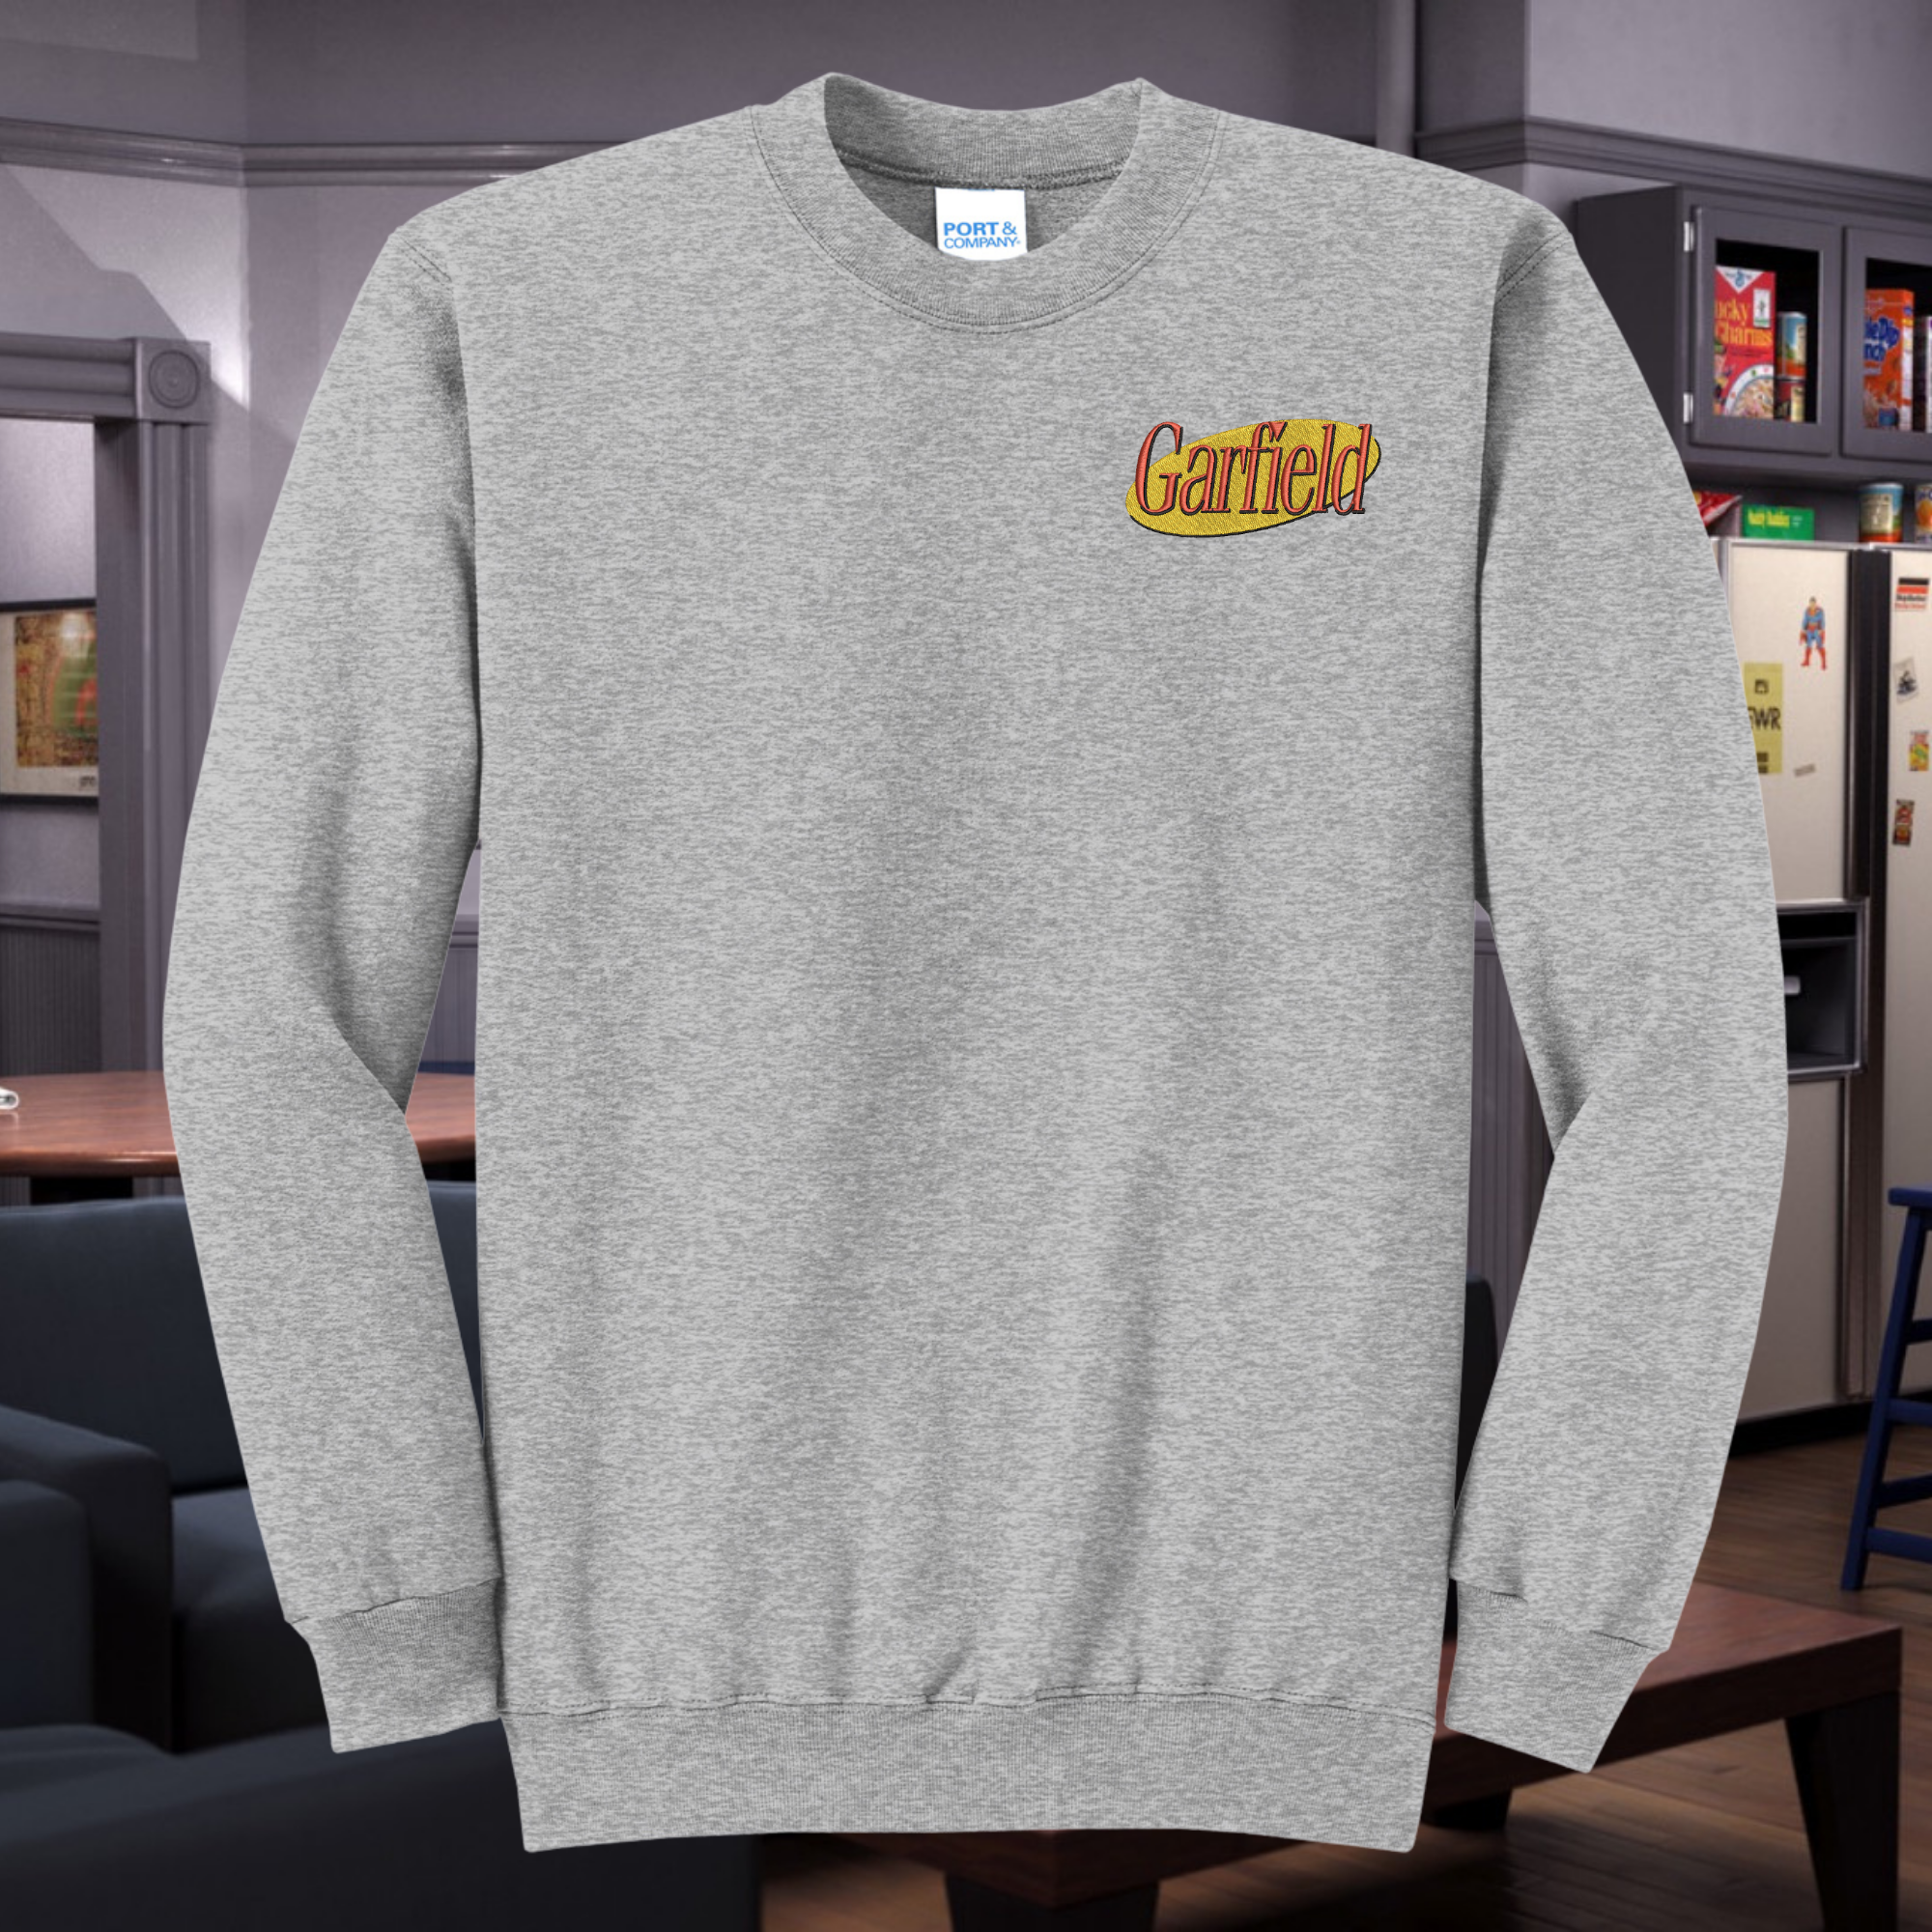 Garfield Seinfeld Crossover Episode Embroidered Crewneck Sweatshirt, Unisex